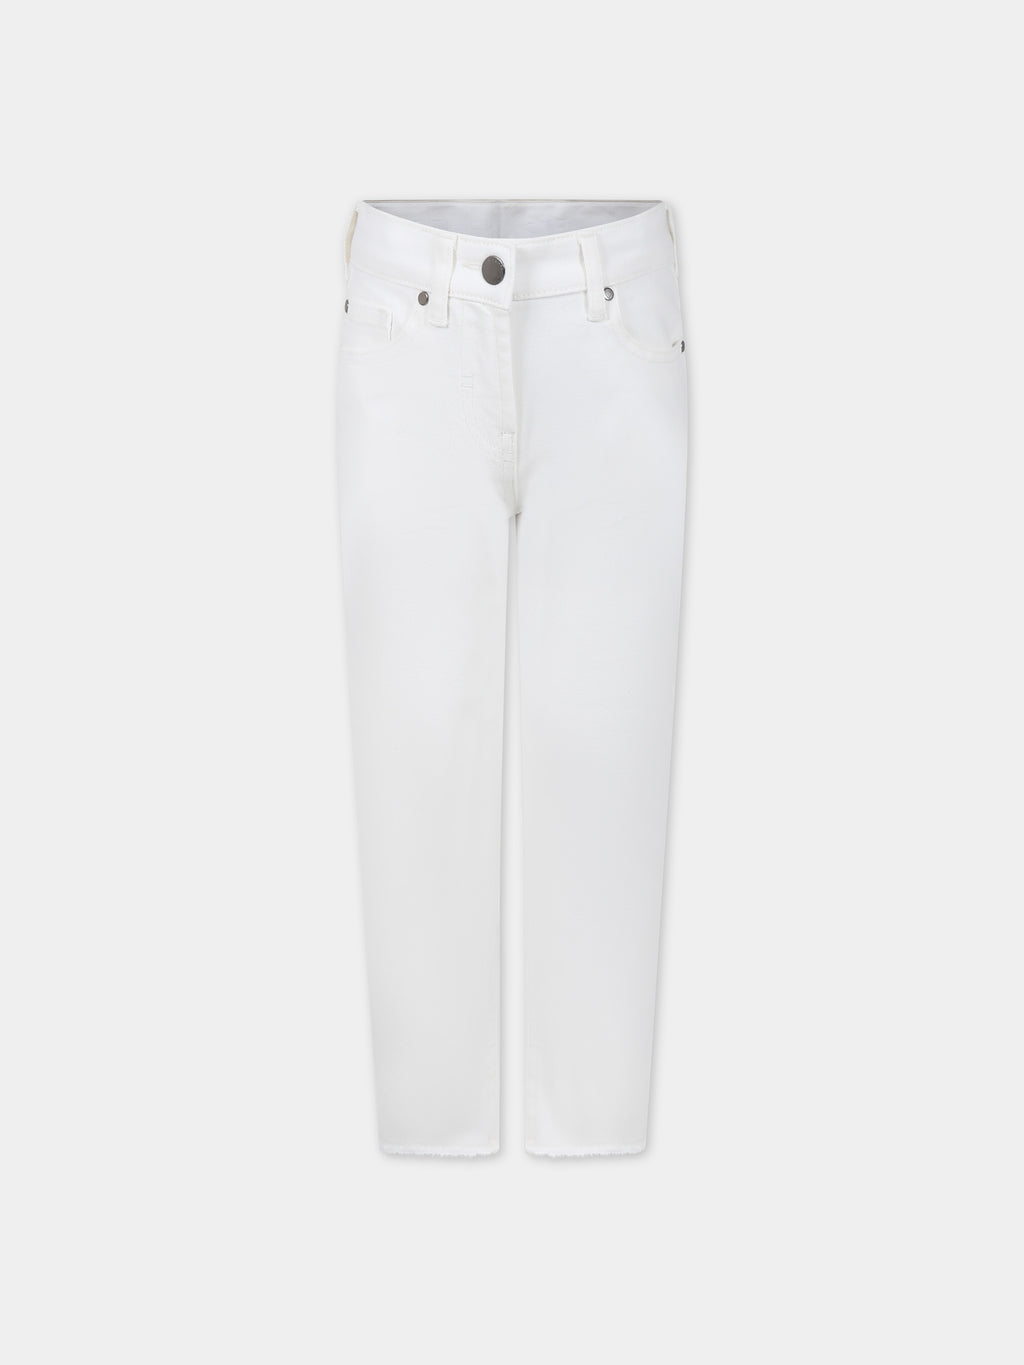 White denim jeans for girl with logo